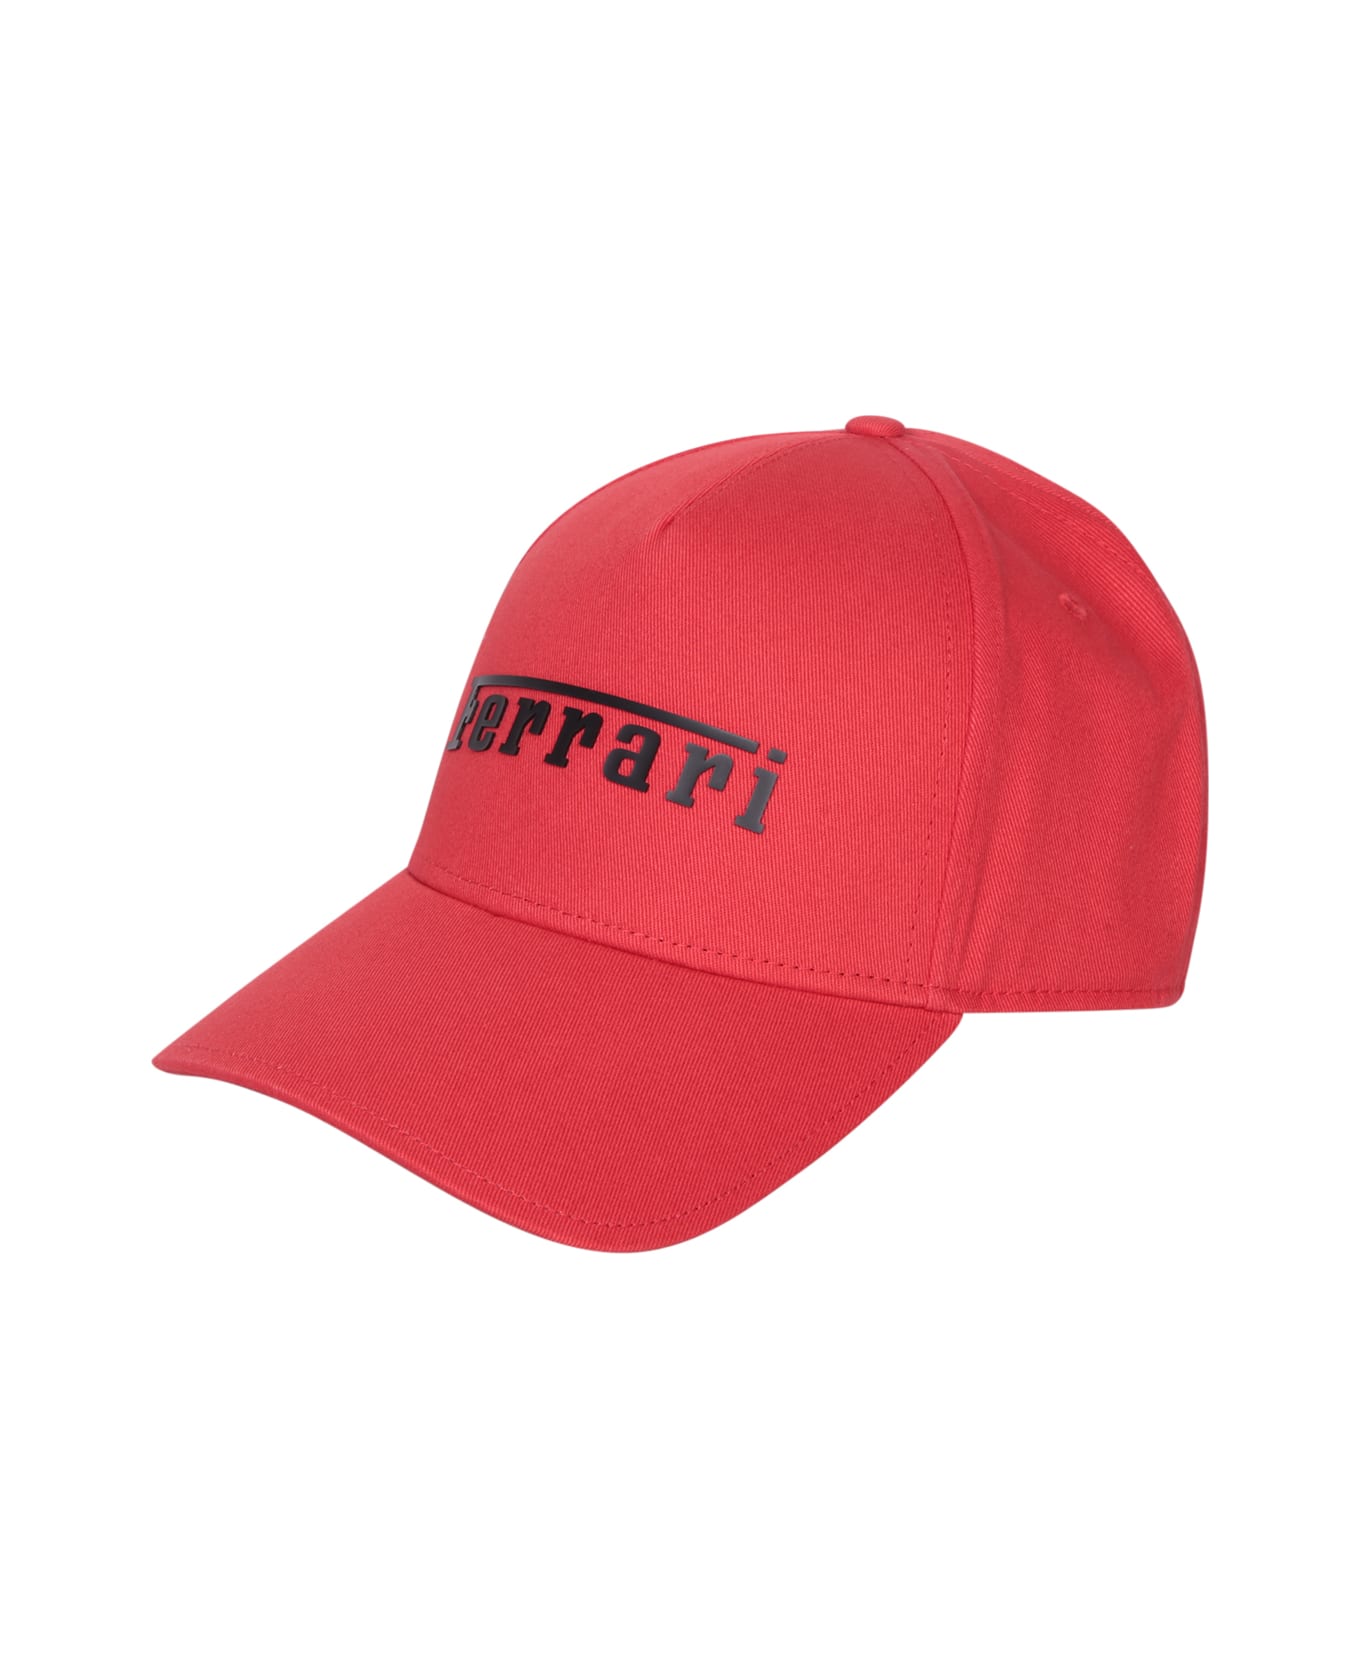 Ferrari Rubberized Logo Red Hat - Red